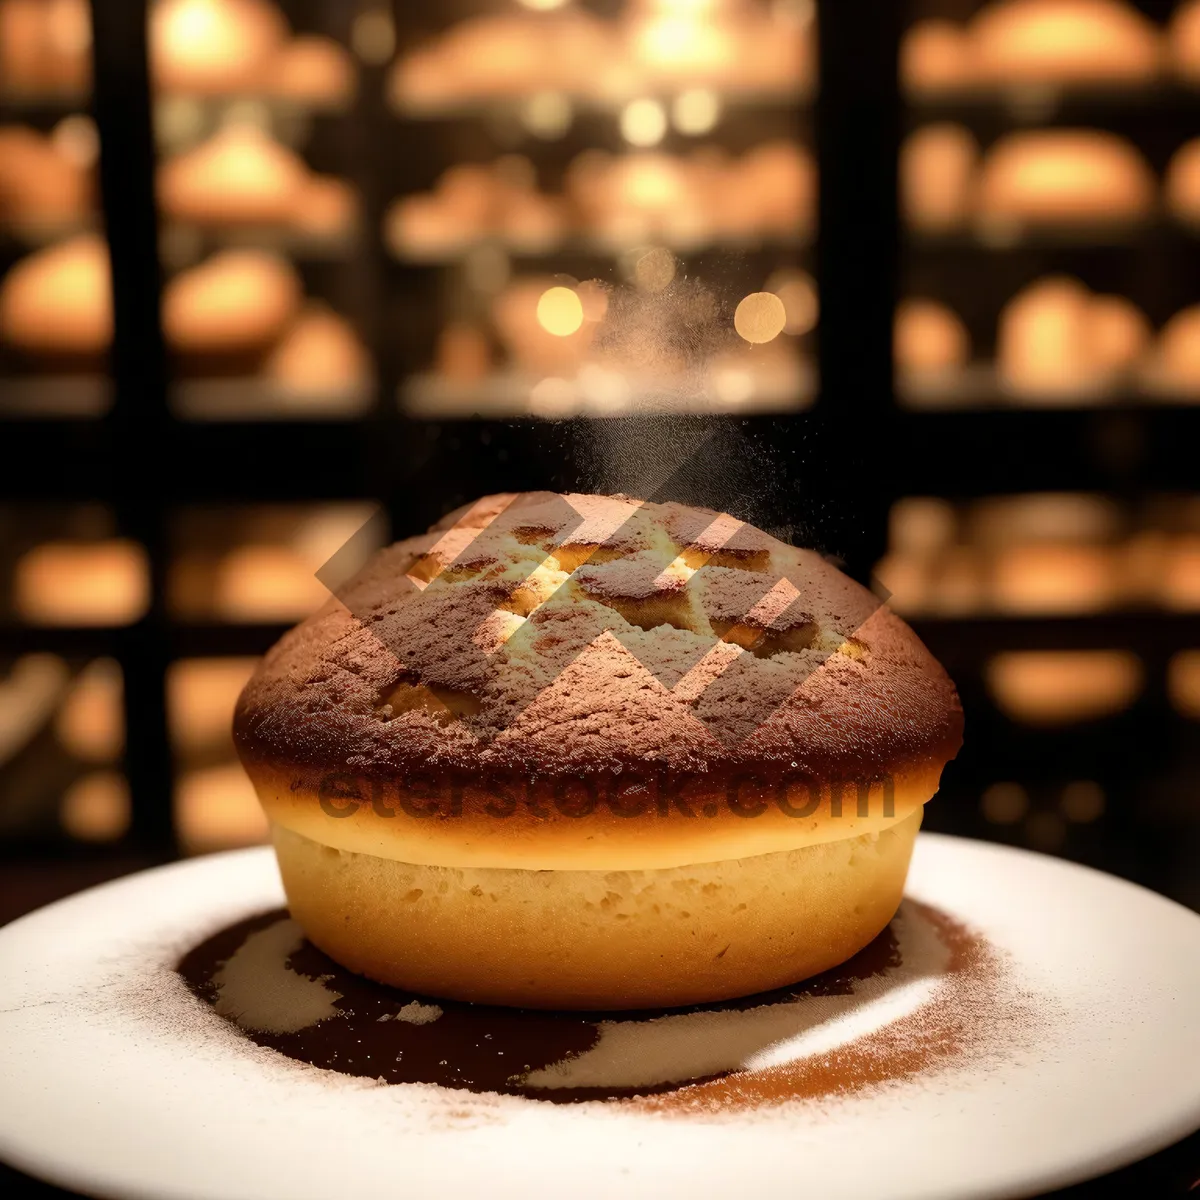 Picture of Delicious Chocolate Espresso Pastry with Cream